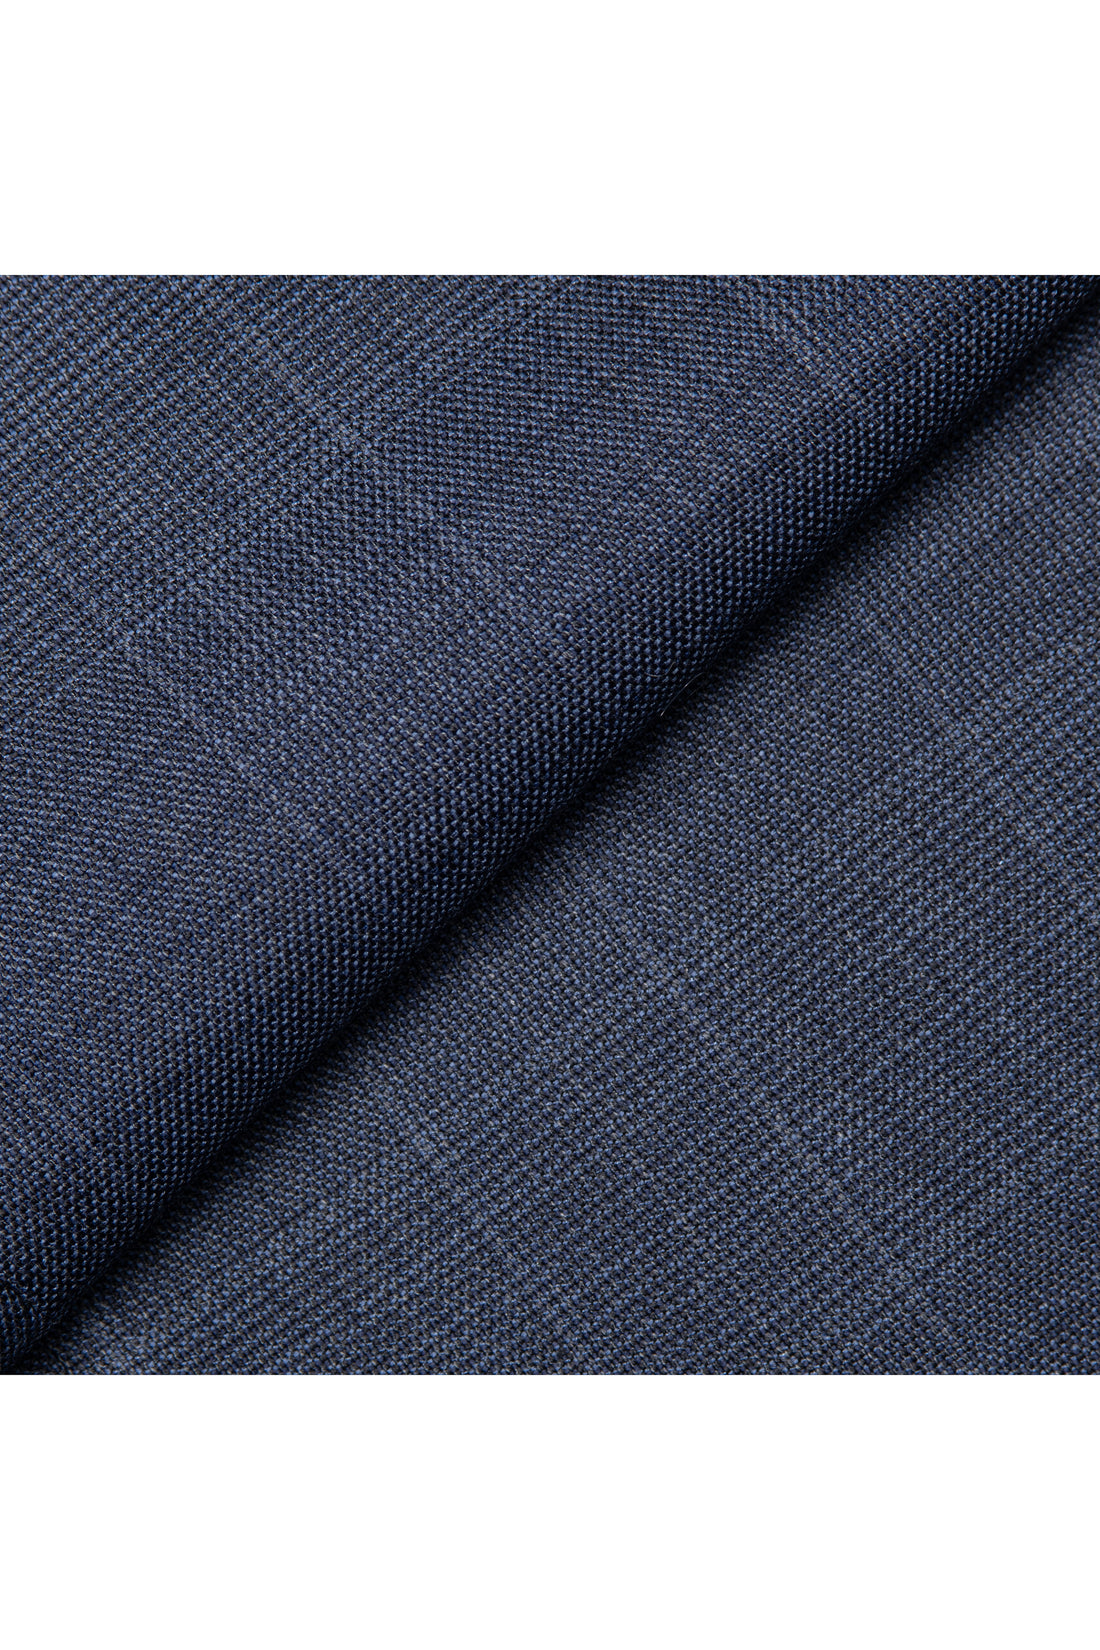 Blue Plaid Performance Suit fabric swatch